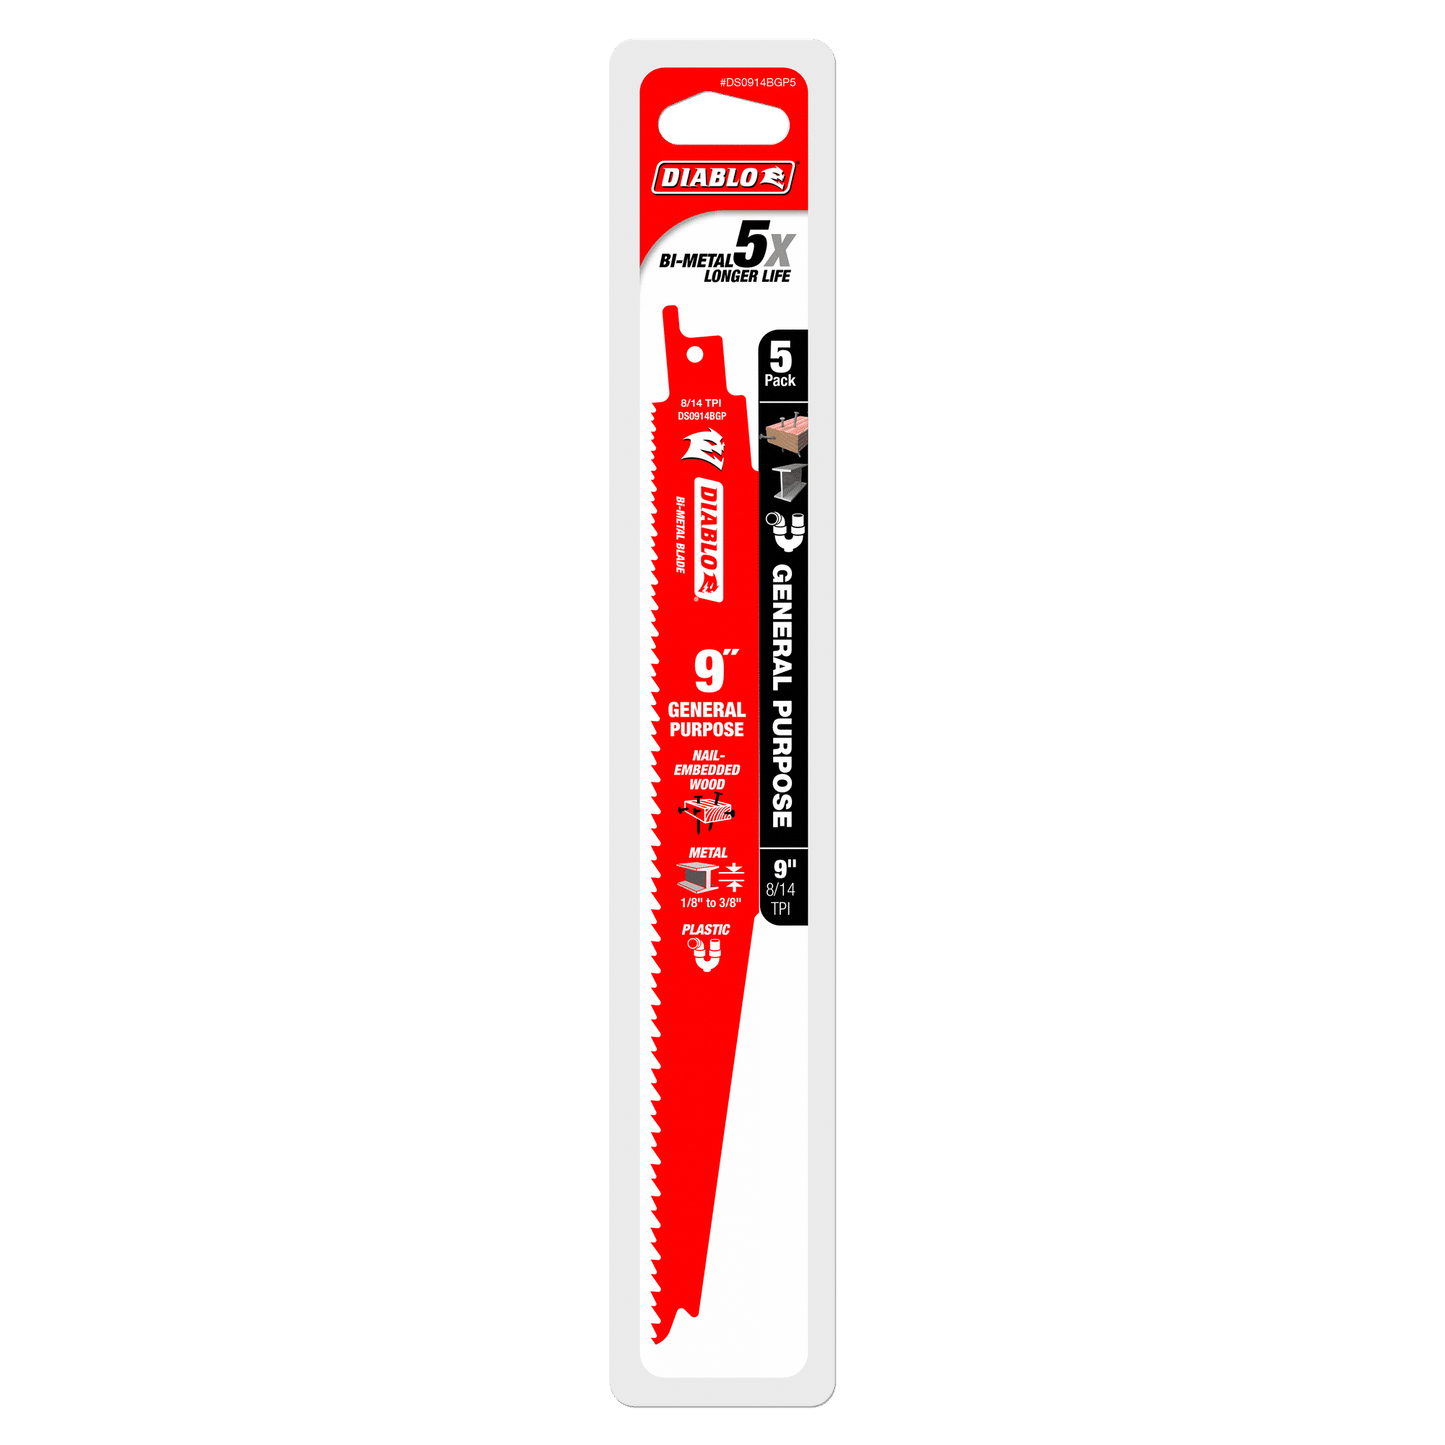 Bi-Metal Recip Blade for Nail-Embedded Wood, Metal, and Plastic (5-Pack)